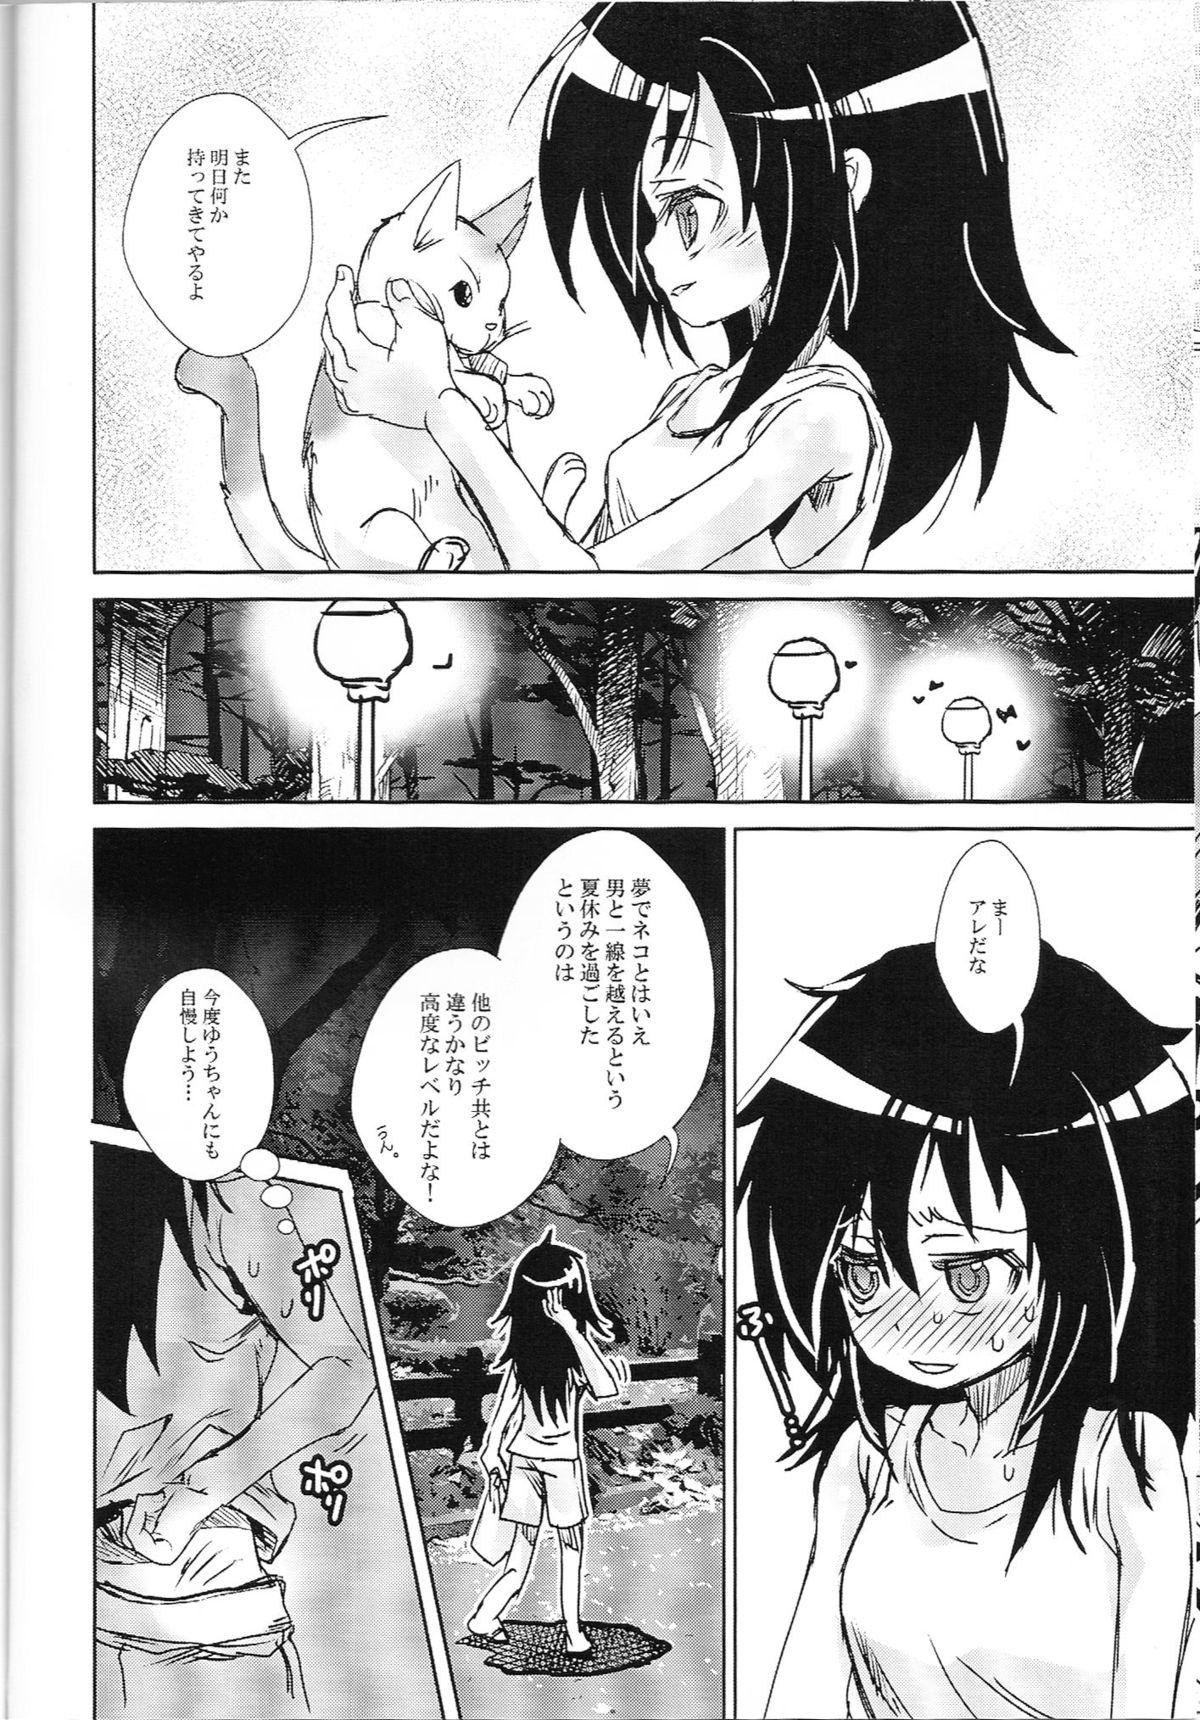 Ikillitts Watashi ga Moteru noha Neko ni dake! - Its not my fault that im not popular Machine - Page 13